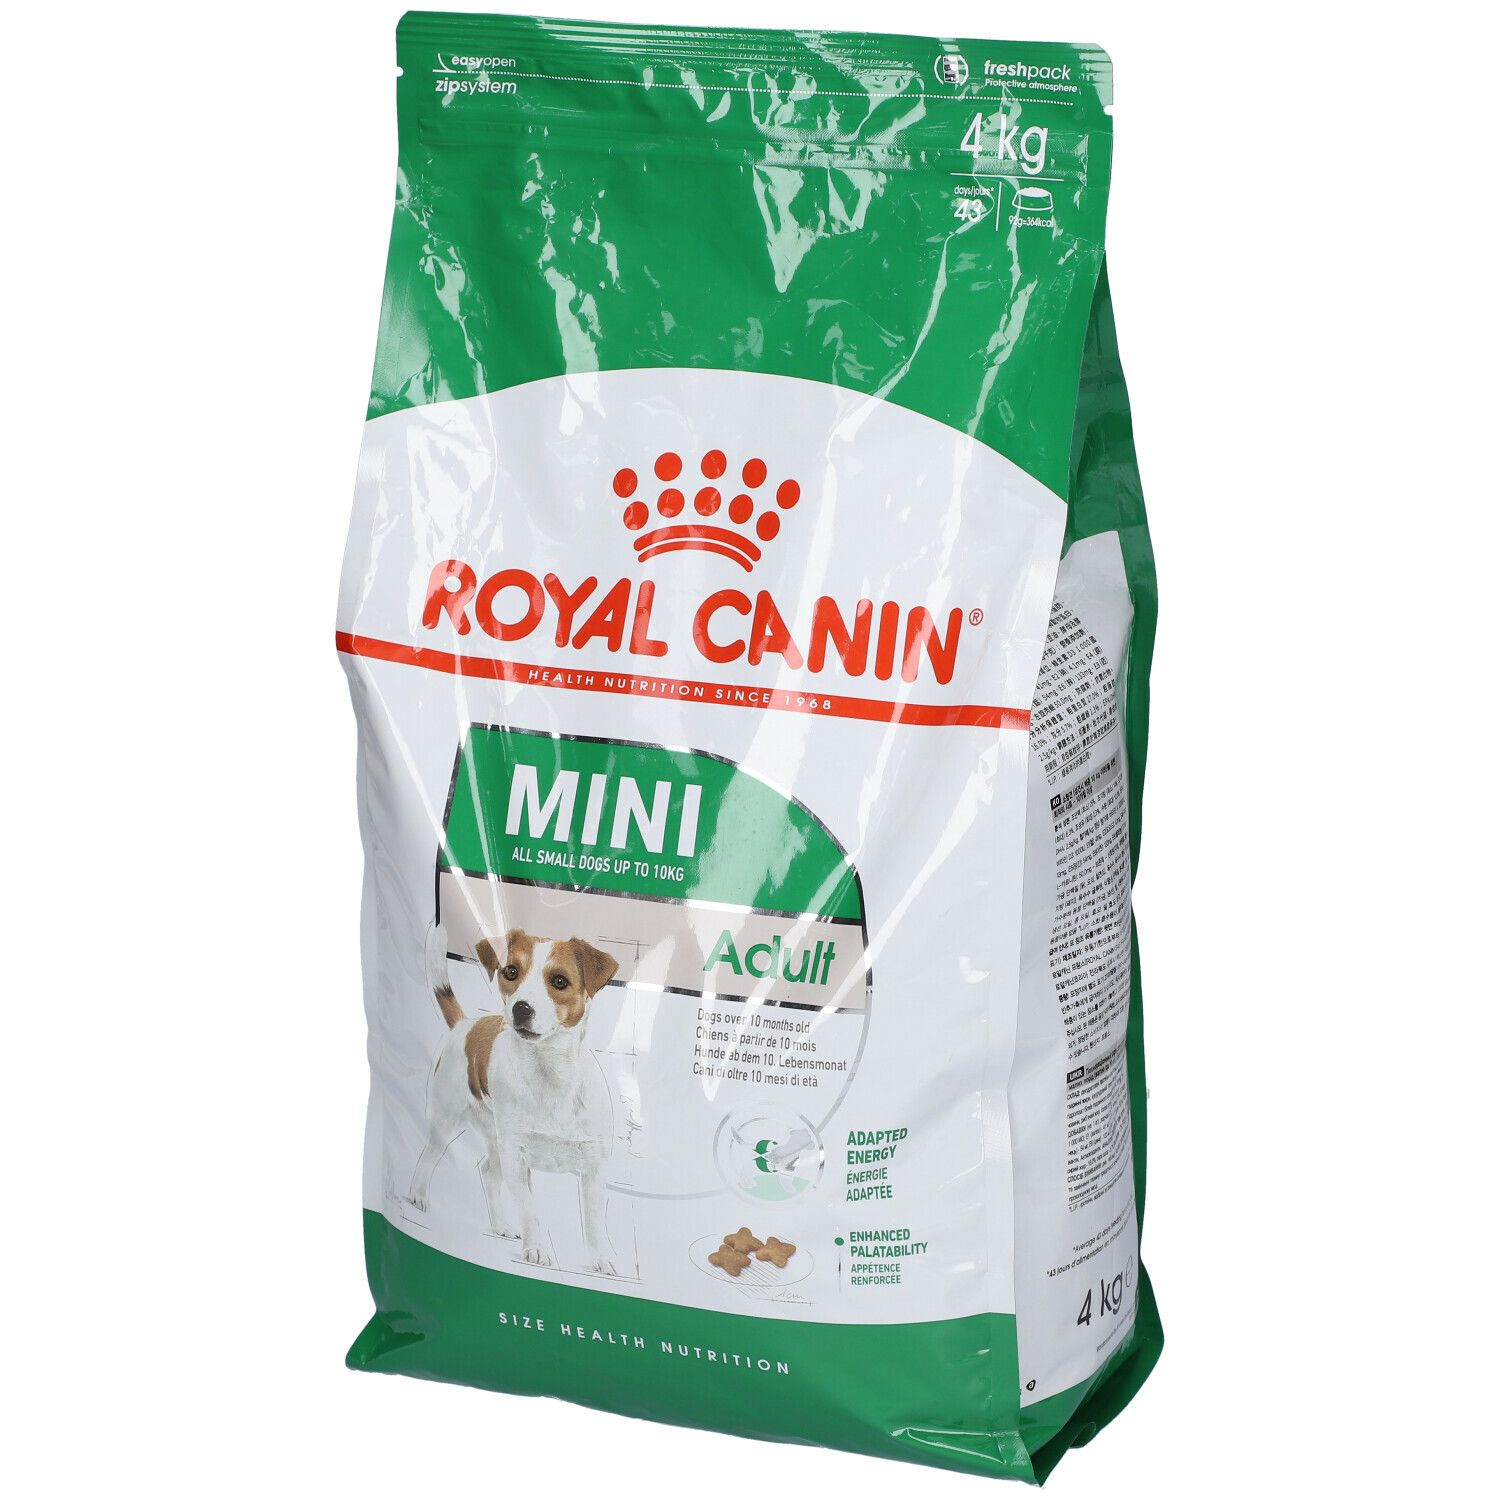 Royal Canin® Mini Adult